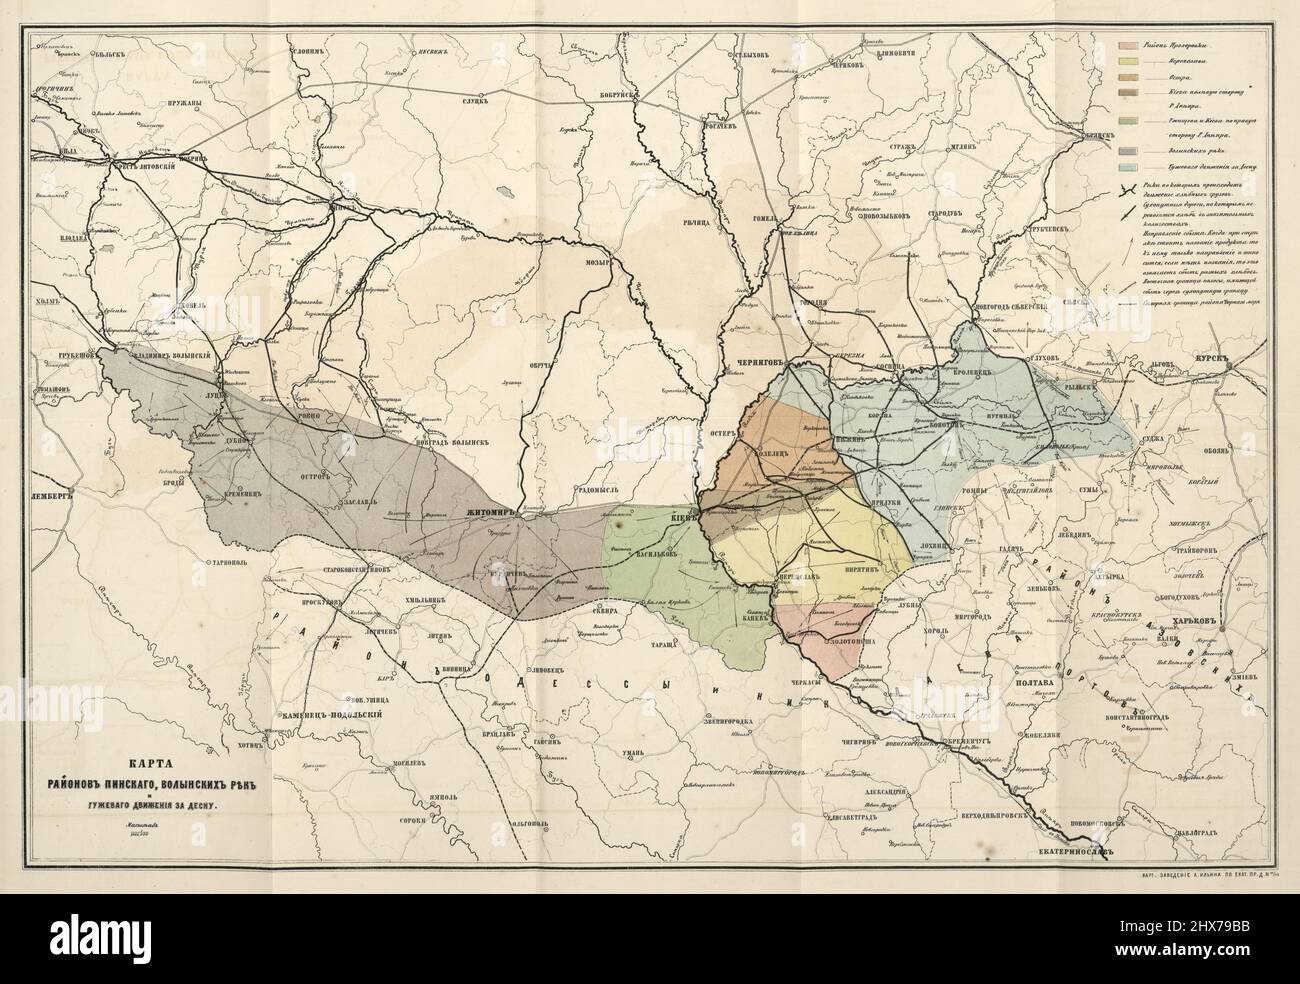 Karta raĭonov Pinskago, Volynskikh ri︠e︡k i guzhevago dvizhenīi︠a︡ za Desnu. I︠A︡nson, I︠U︡. Ė. 1870 - (I︠U︡līĭ Ėduardovich), 1835-1893. Mappa vintage. Foto Stock